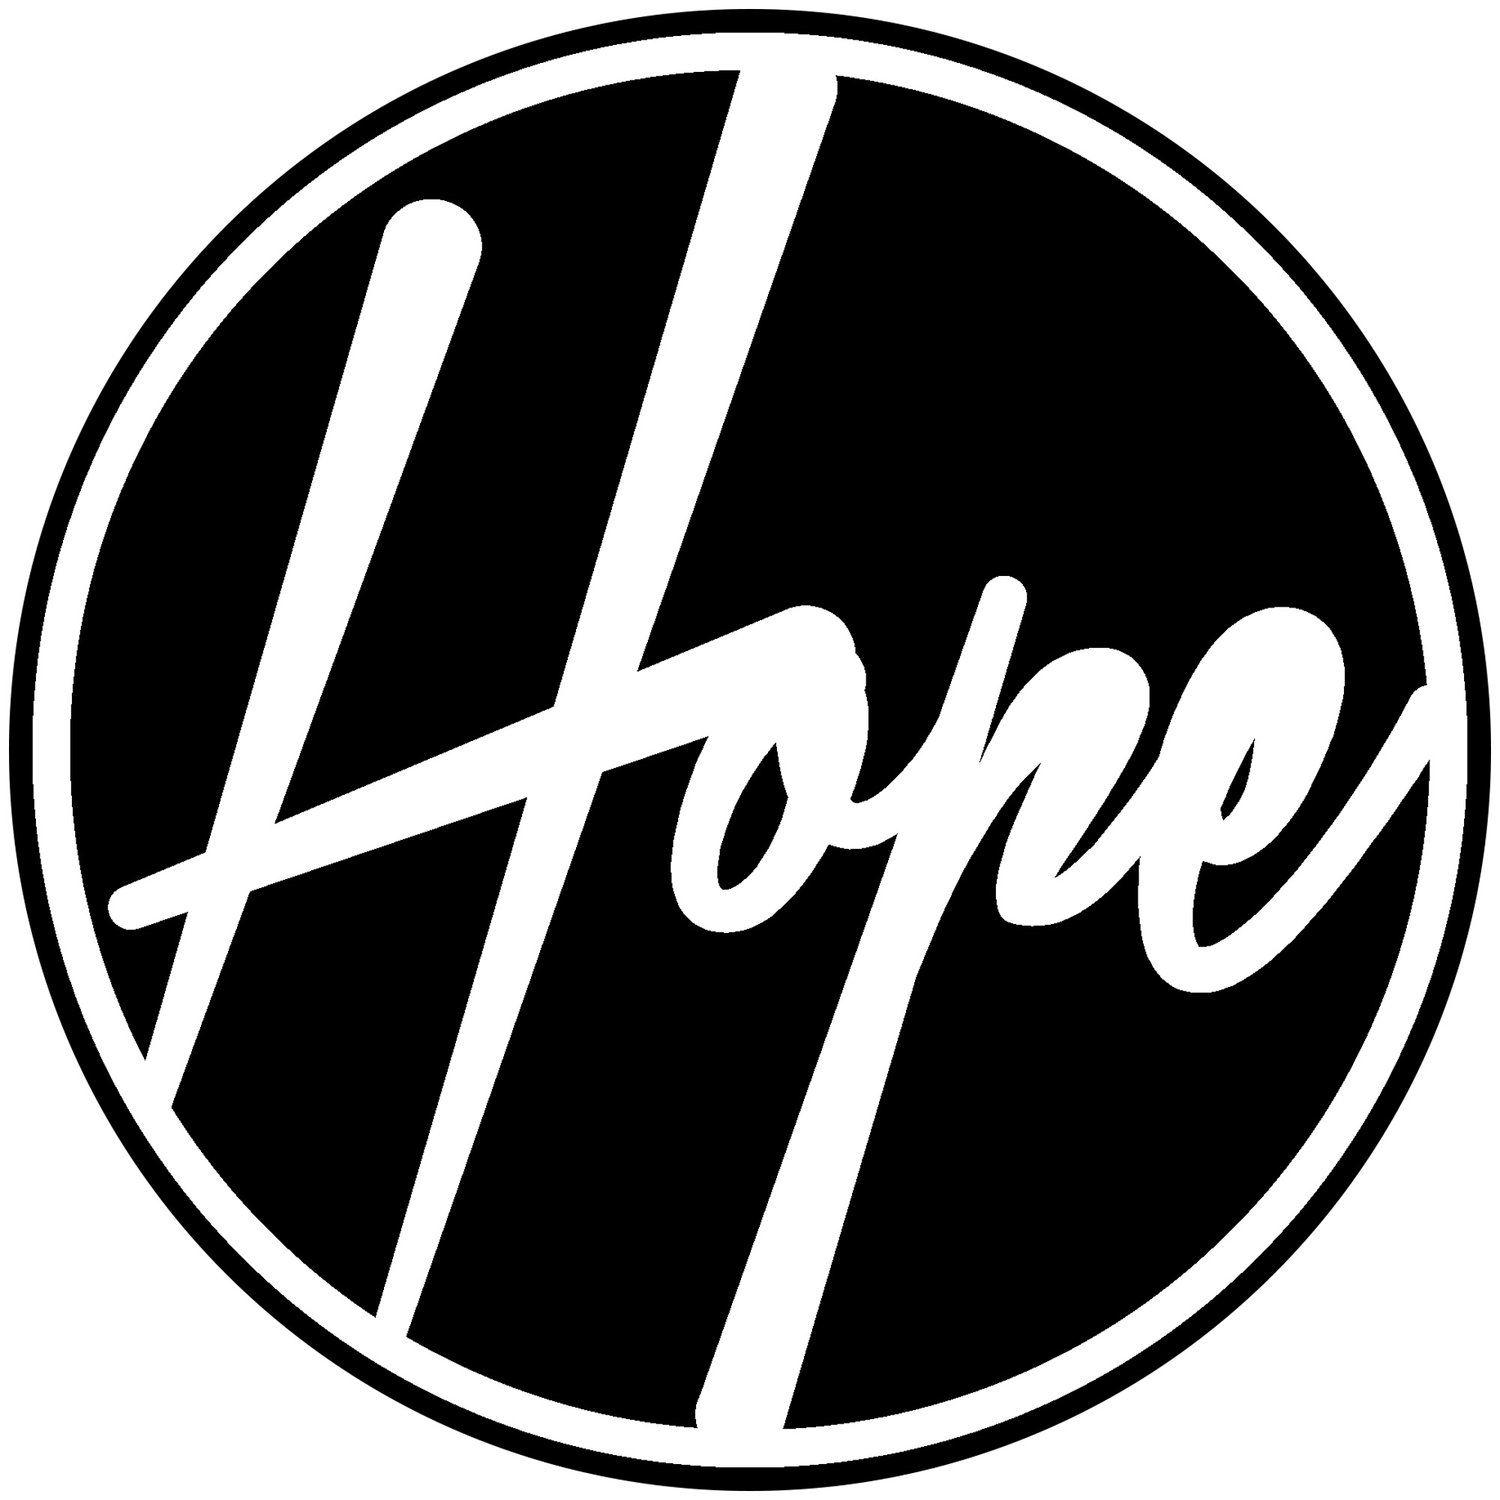 JUNE 5, 2022 HOPE SERVICE